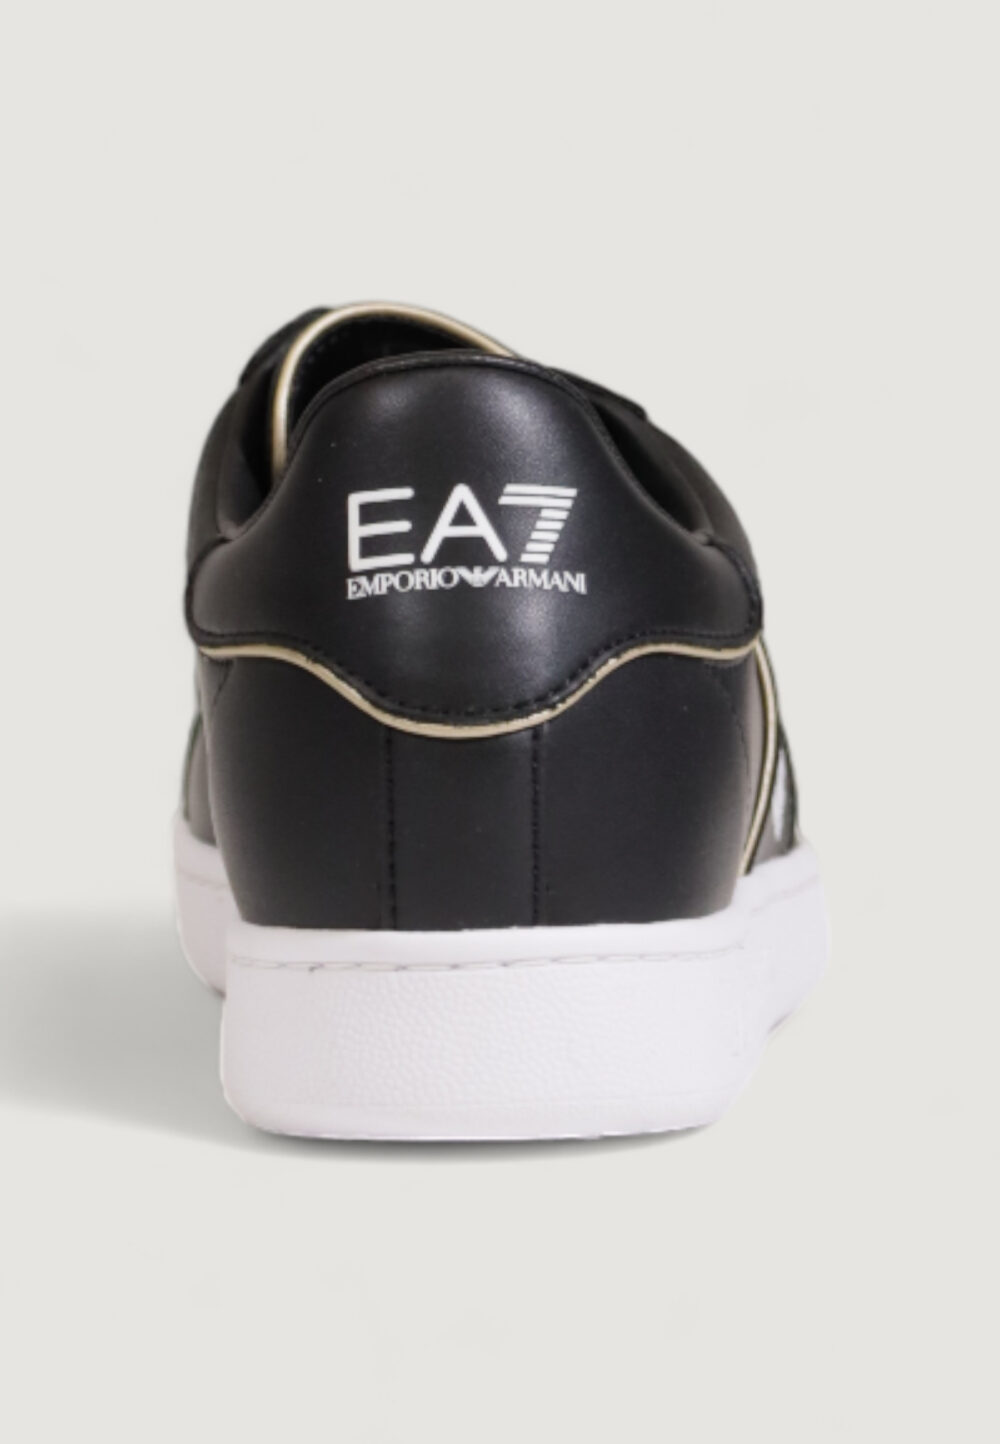 Sneakers EA7 CLASSIC EA7 LOGO Black gold - Foto 4